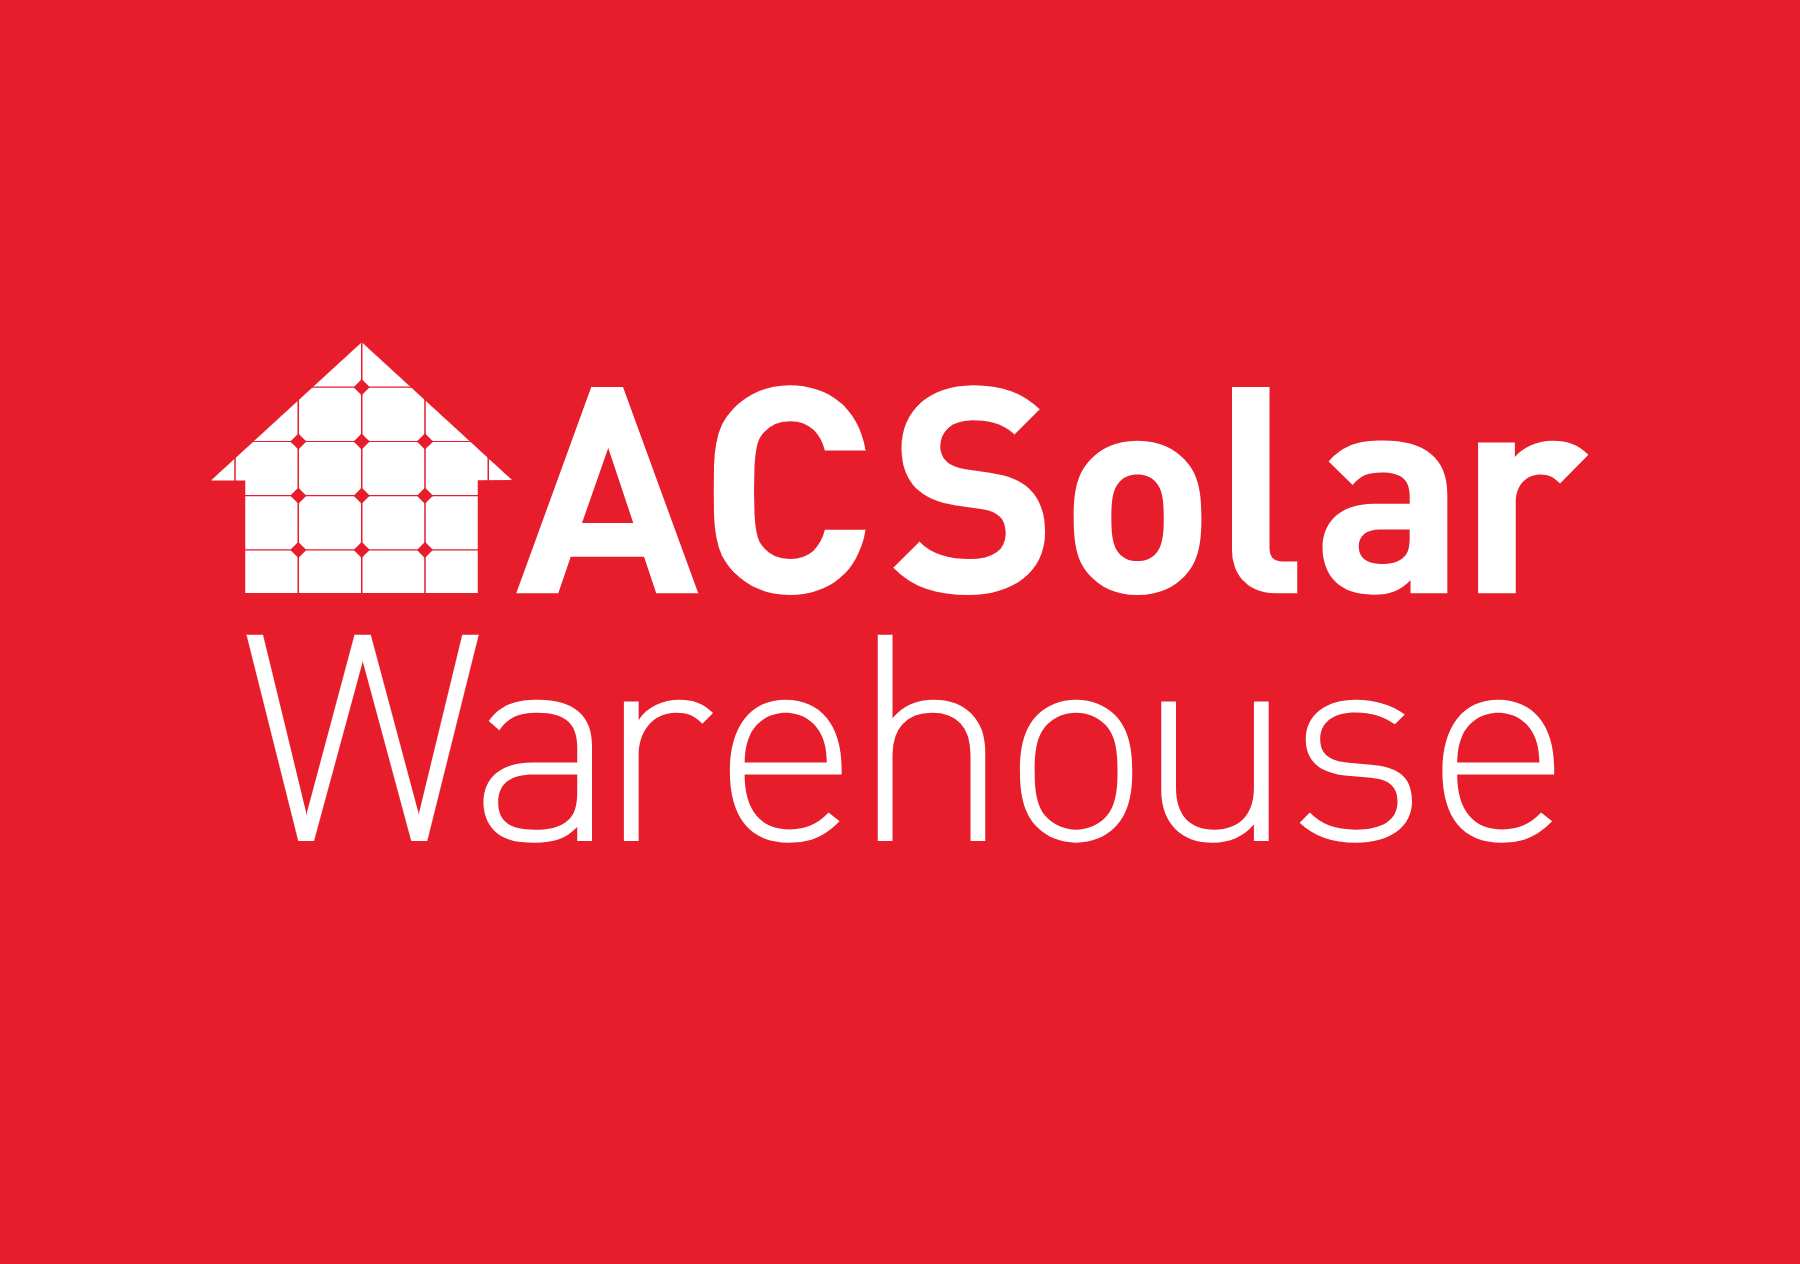 AC Solar Warehouse